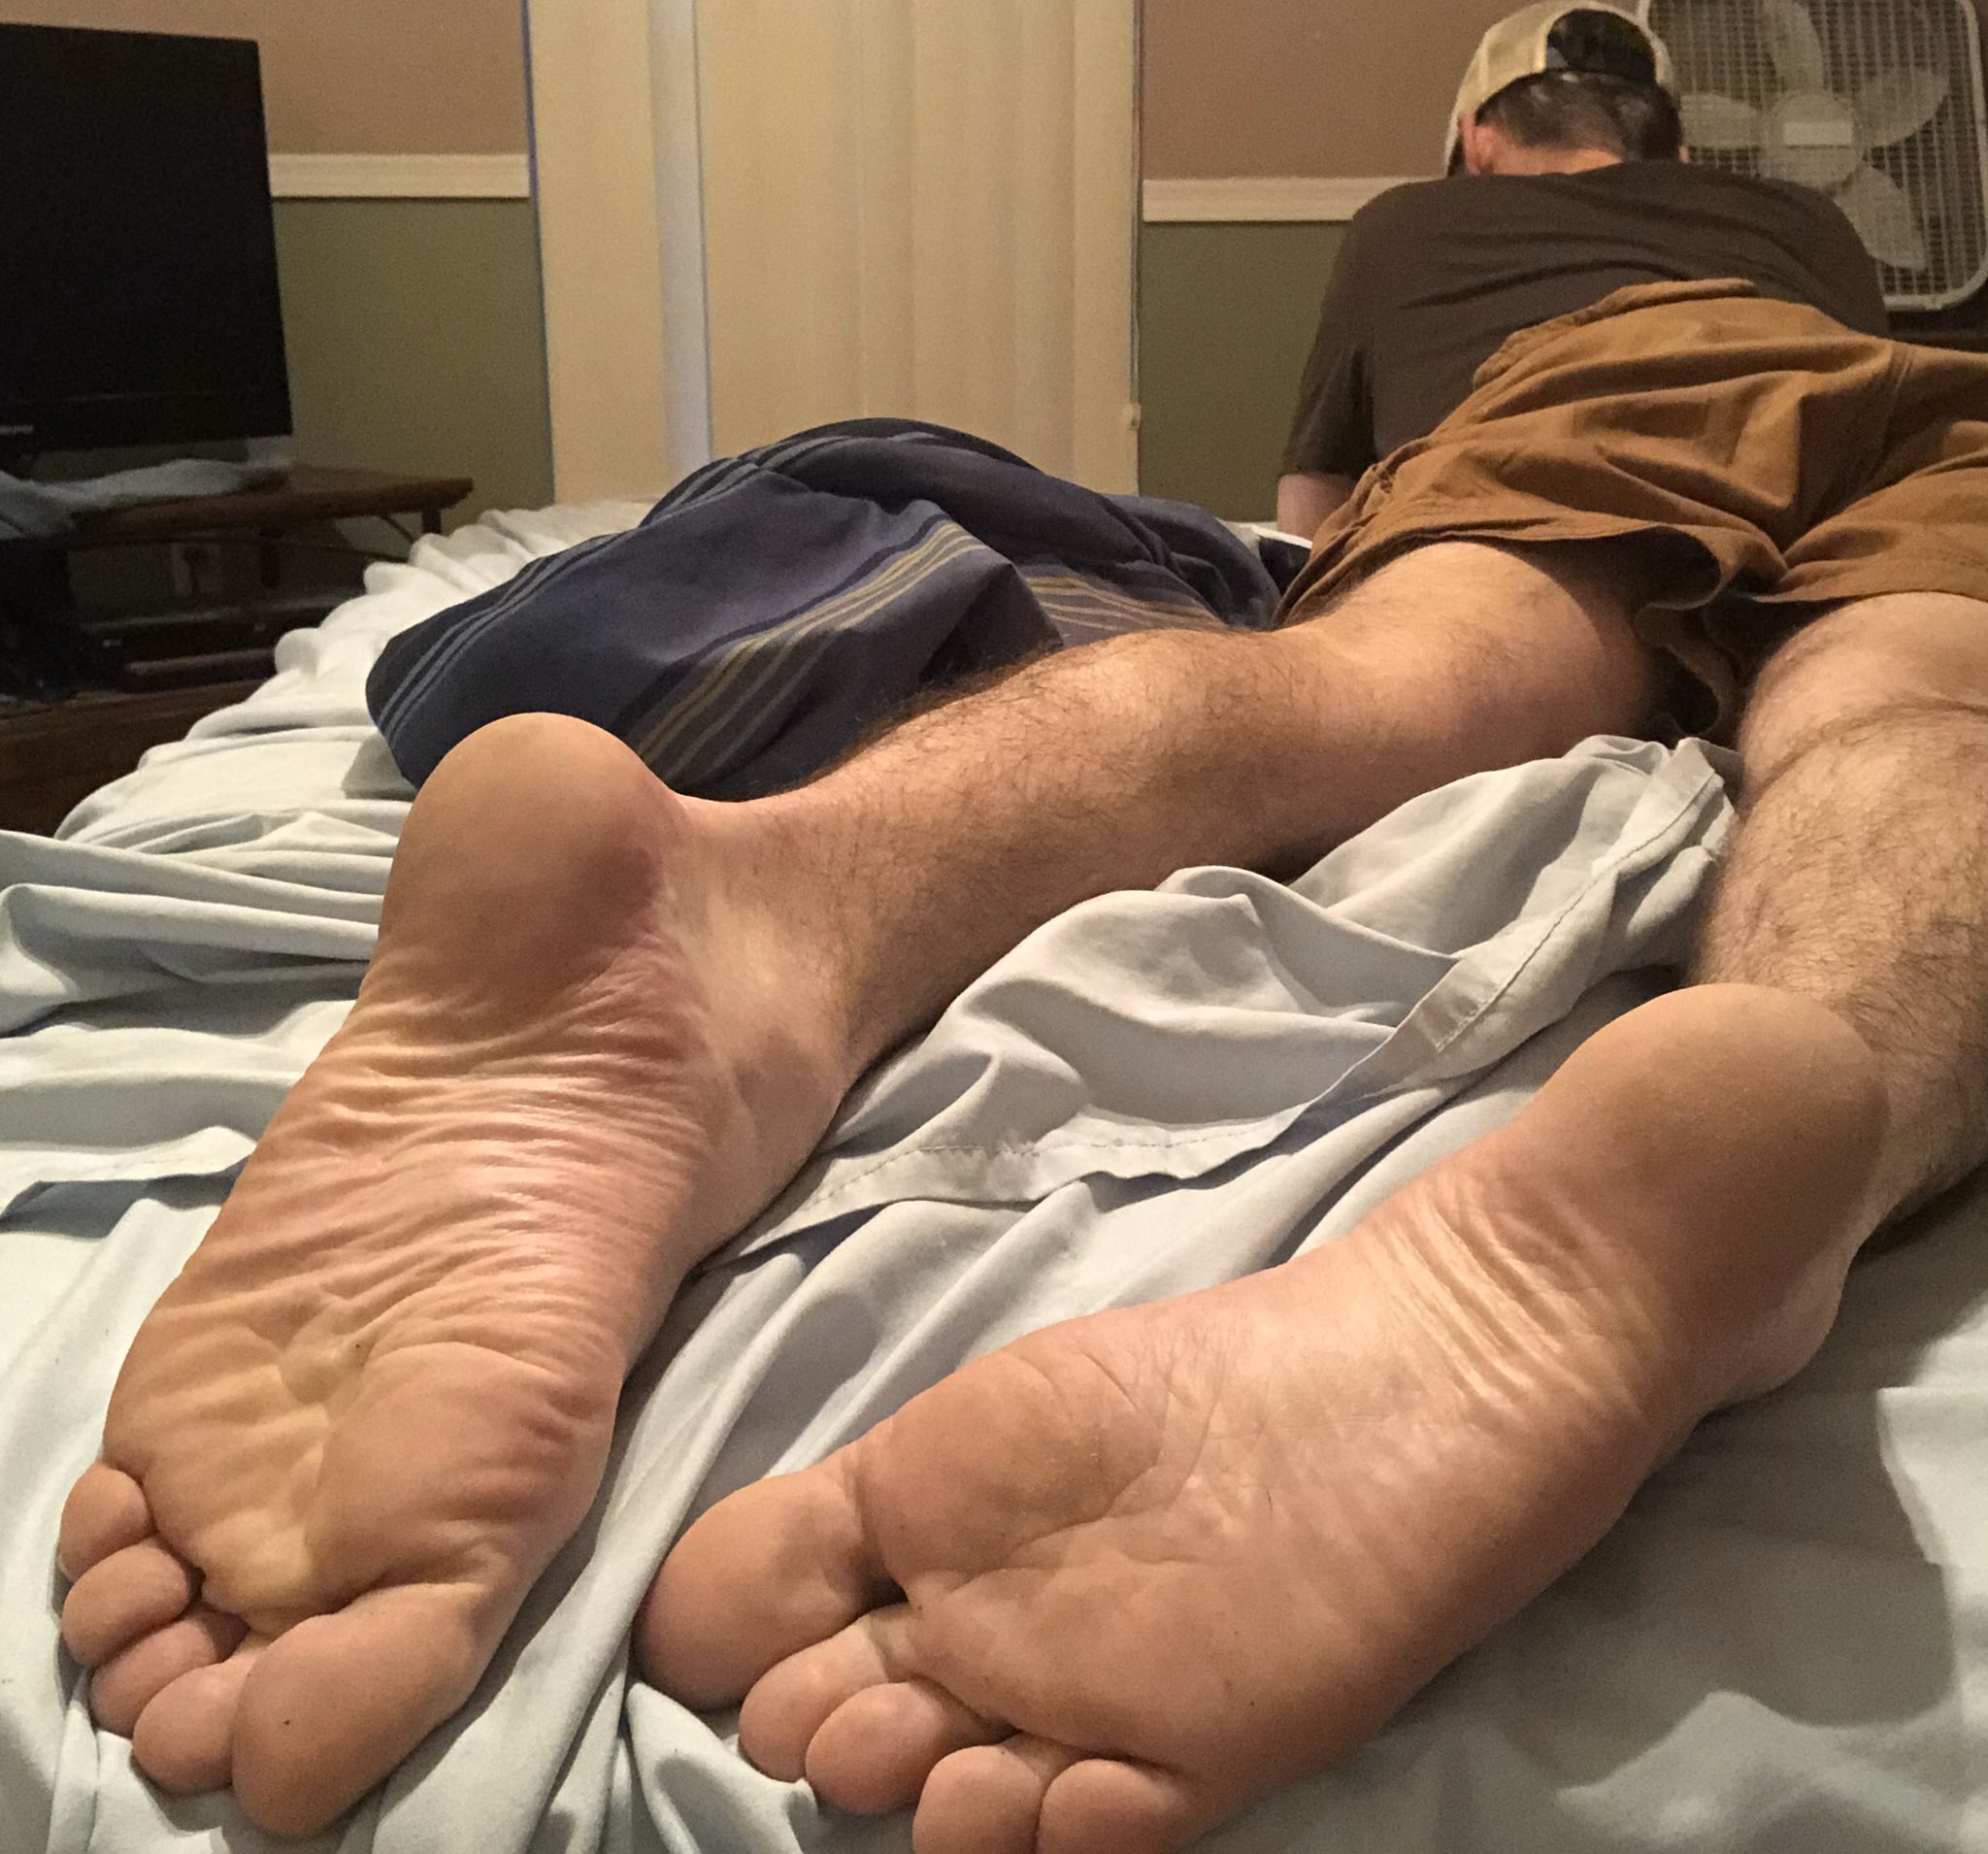 My Florida Feet ðŸ‘£ on Twitter.